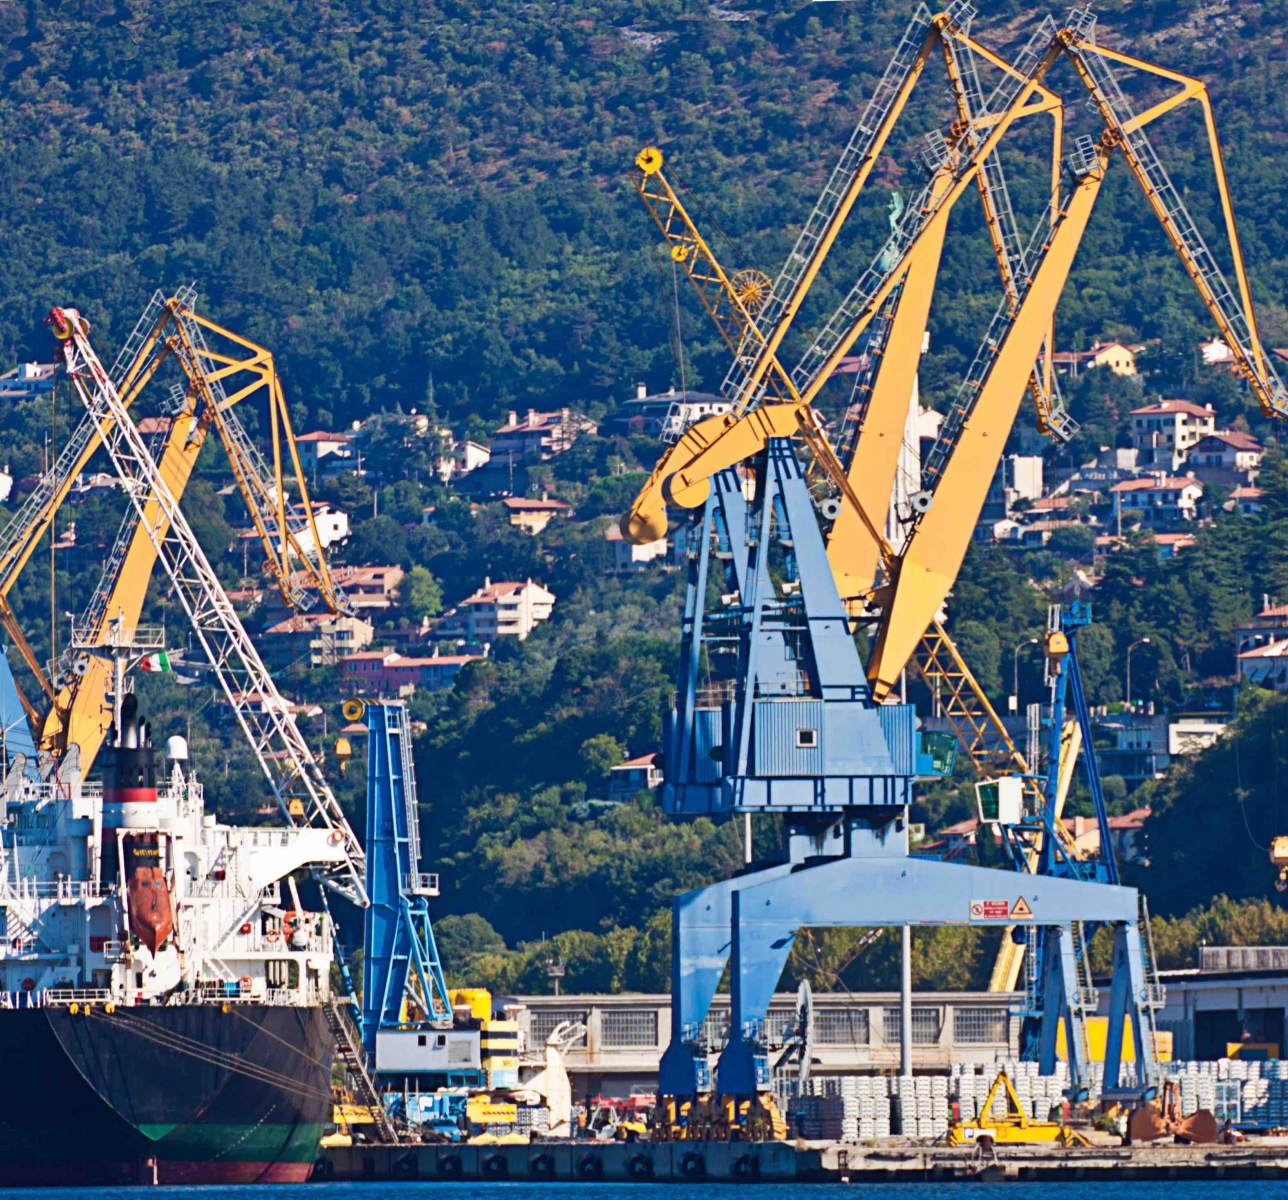 Trieste Italy, industrial harbor installations